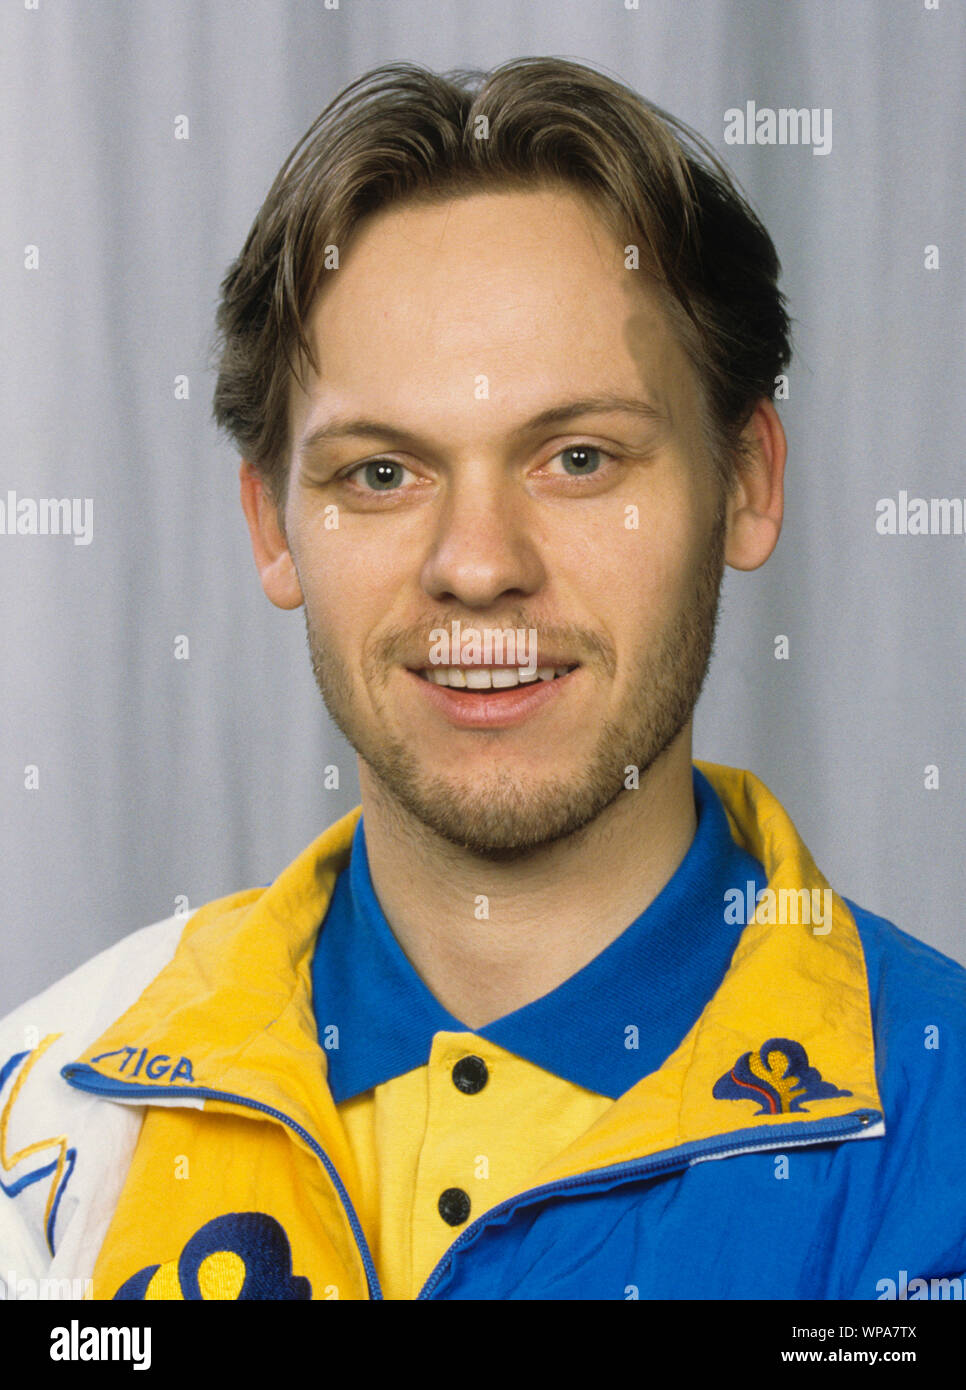 MIKAEL APPELGREN former Swedish table tennis player Stock Photo - Alamy